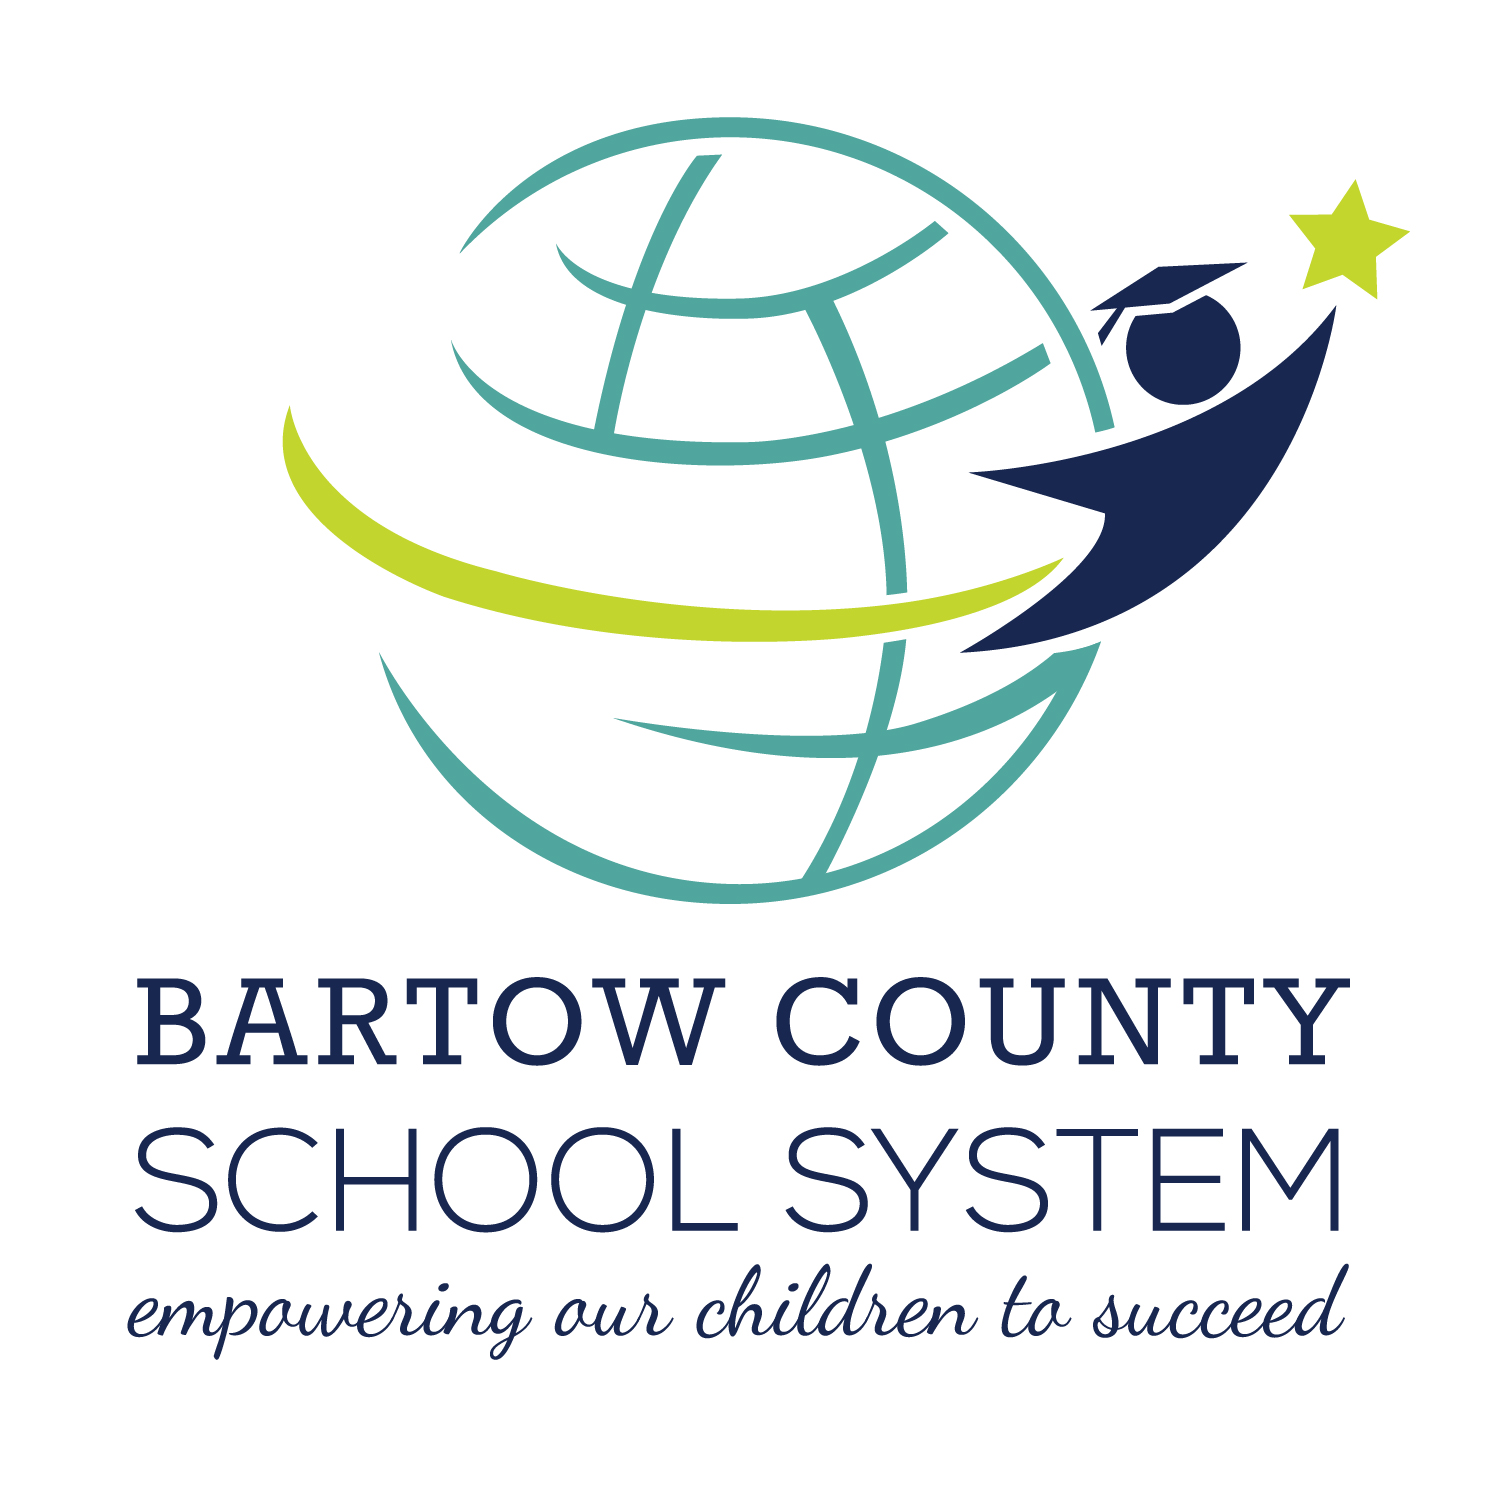 Benefits | Bartow County School System